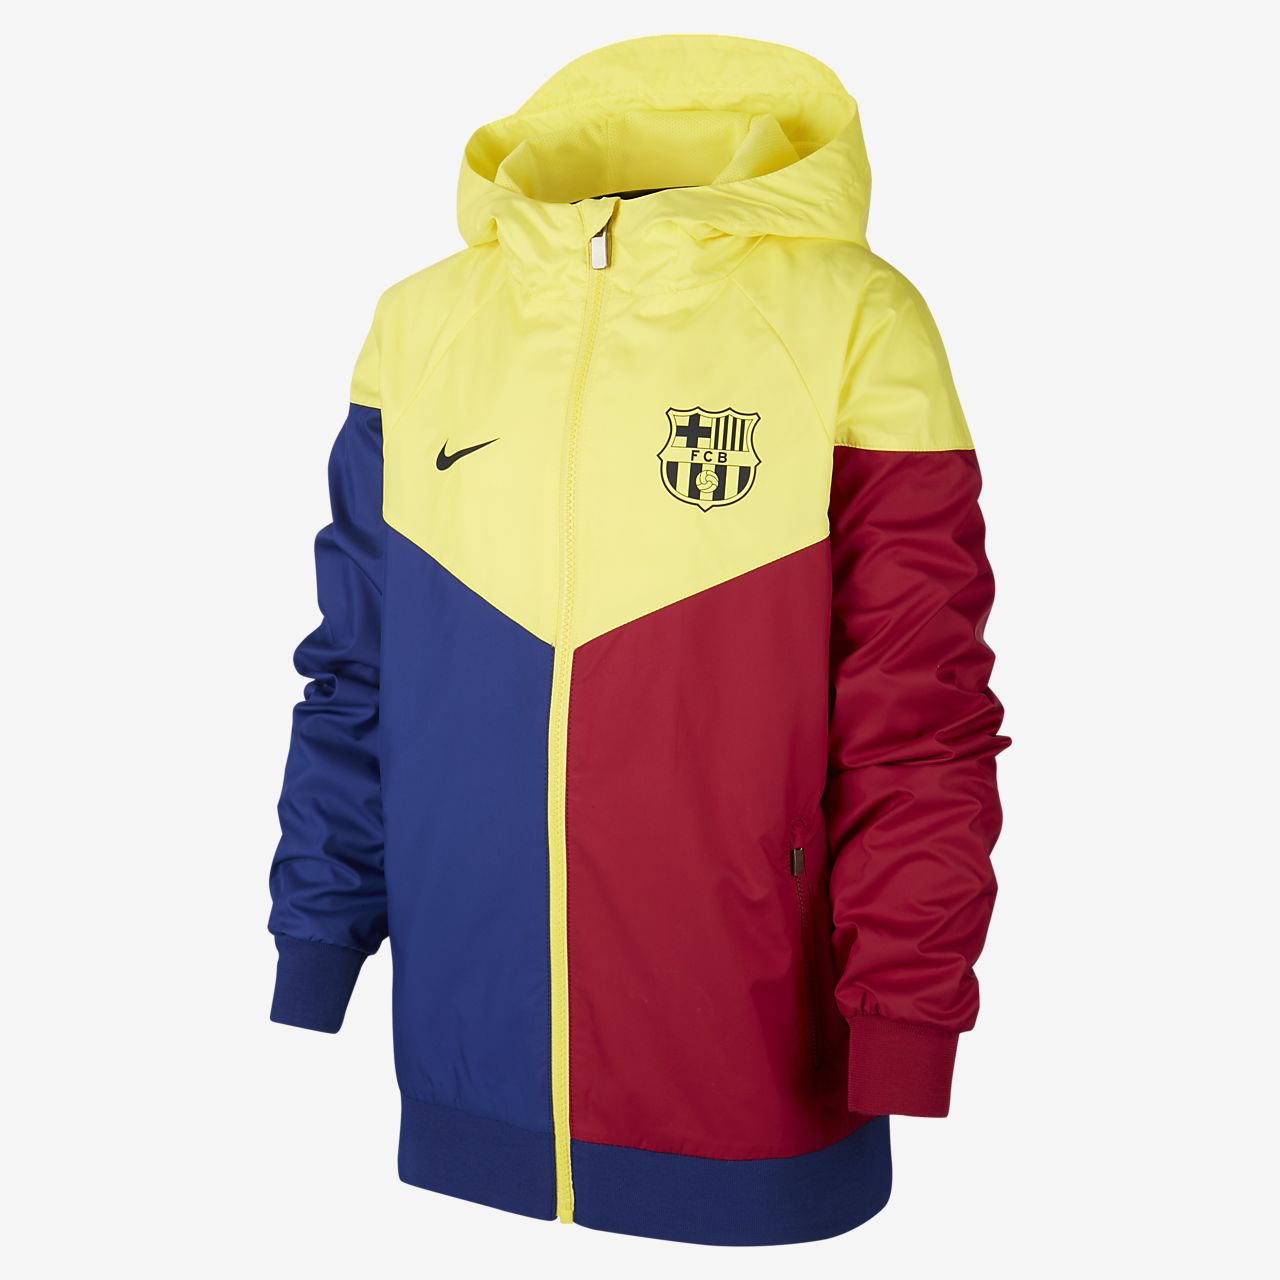 fc barcelona youth jacket